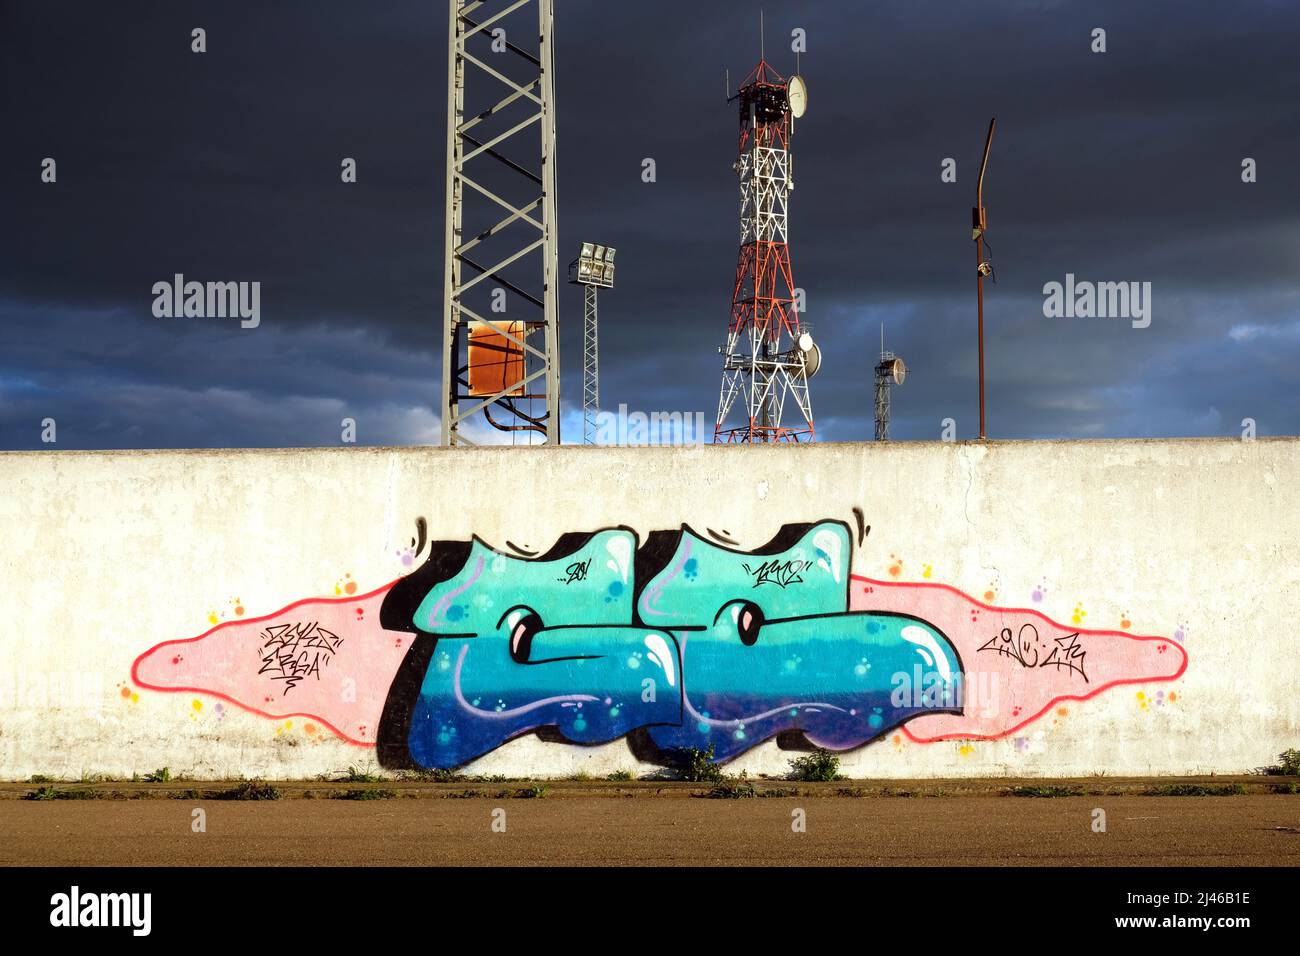 Graffiti on a wall at the football stadium, Orellana la Vieja, Extremadura. Floodlights and aerial towers agains a dark, dramatic sky Stock Photo